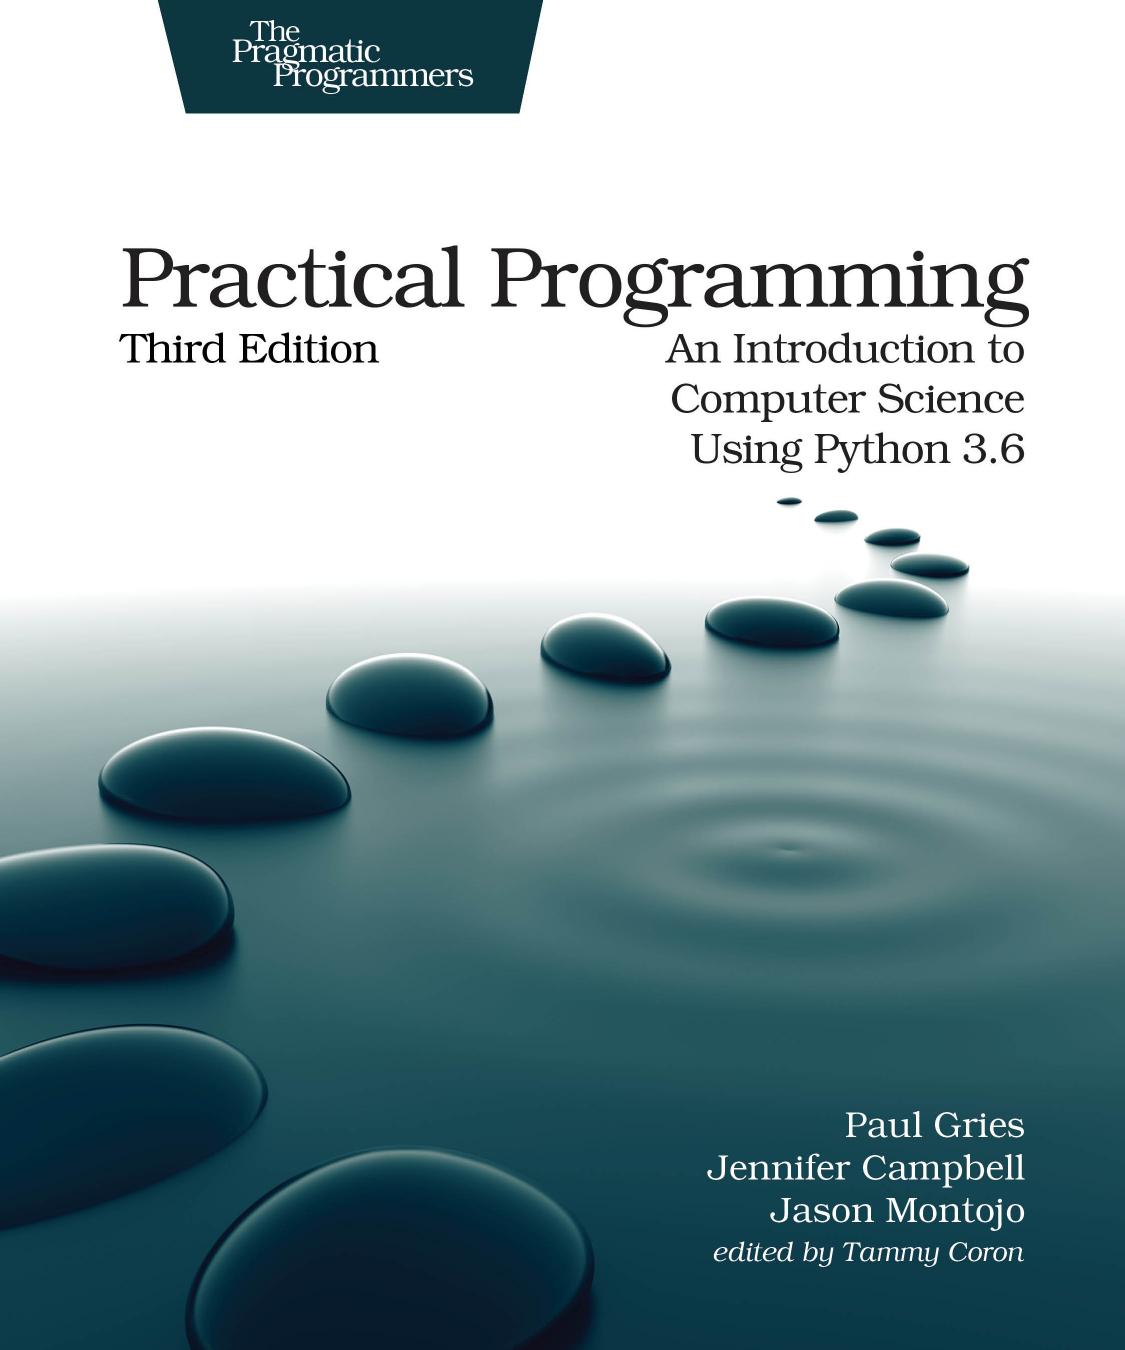 Practical Programming, Third Edition